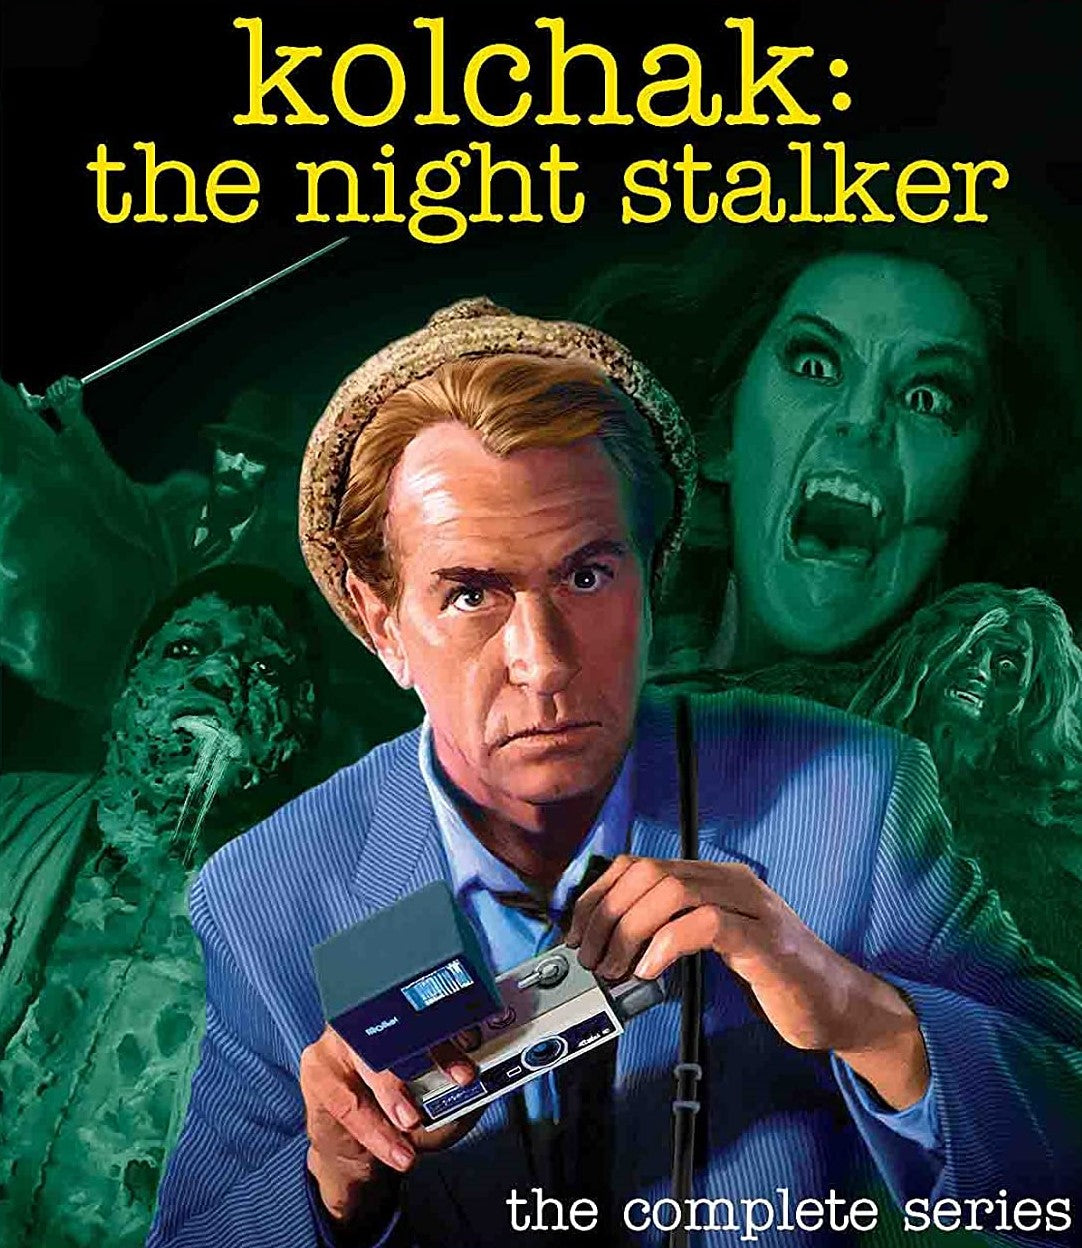 Kolchak: The Night Stalker: Complete Series Blu-Ray Blu-Ray